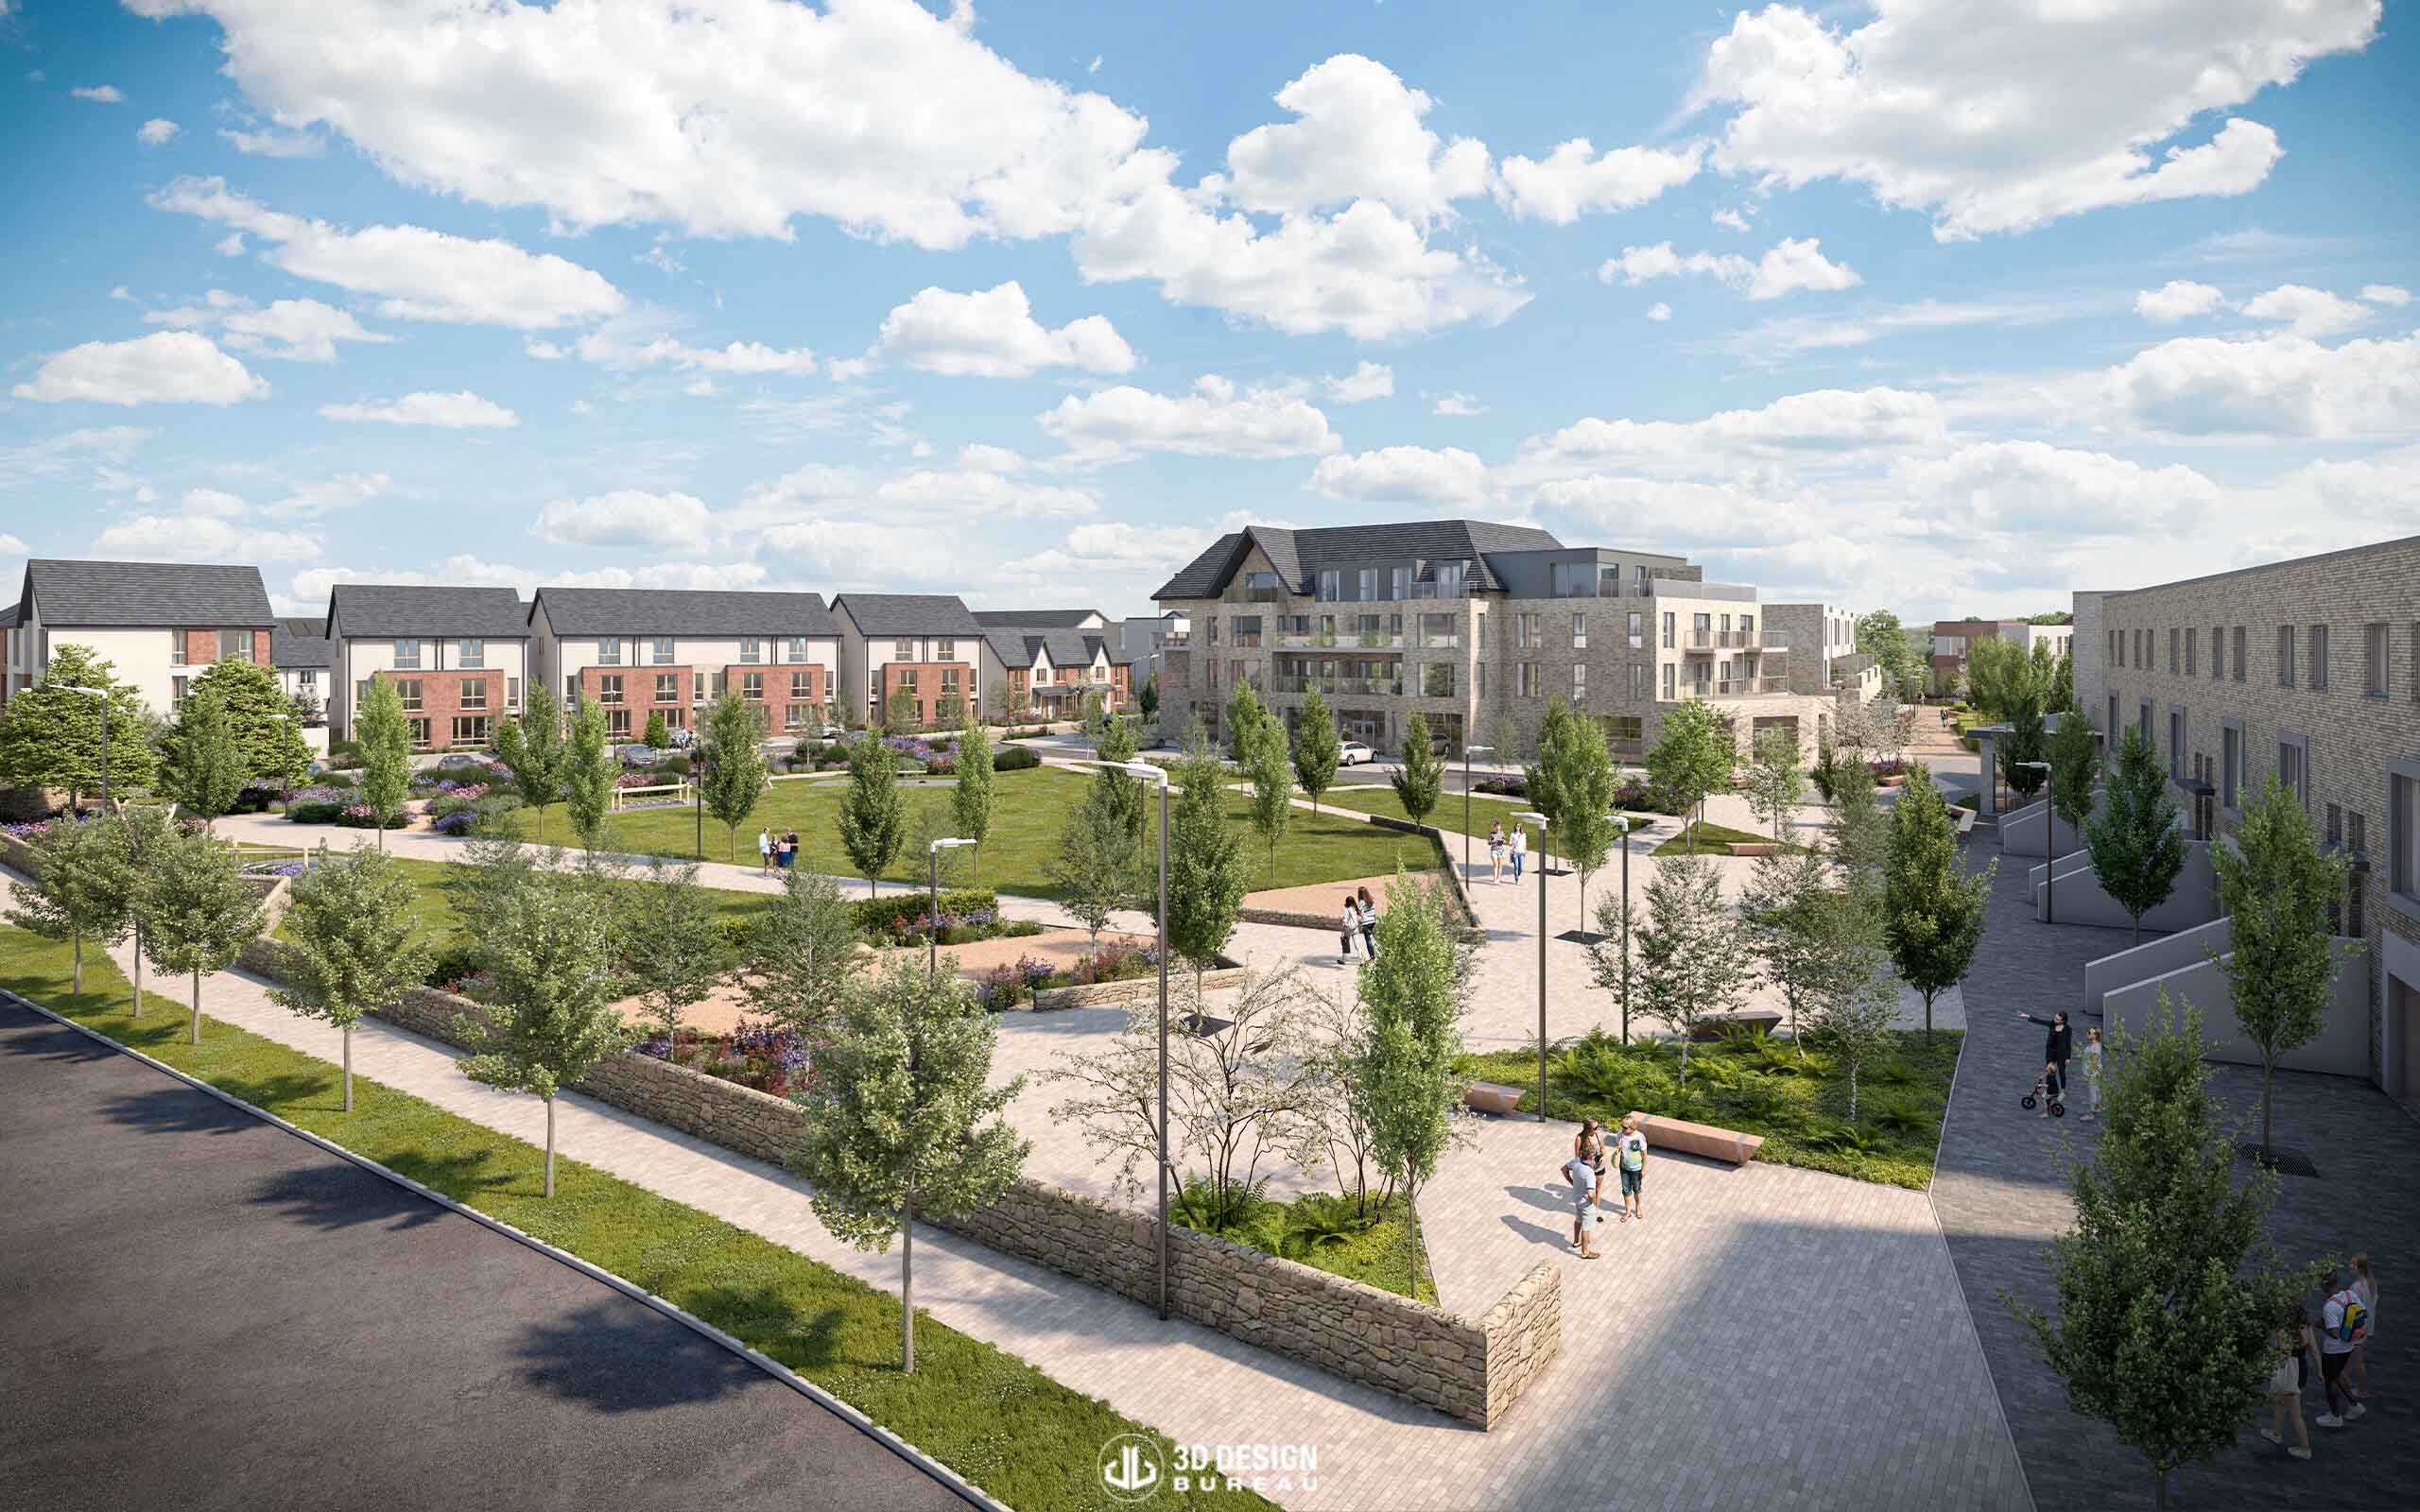 Architectural CGI of planned Strategic Housing Development in Kilternan, Dublin.